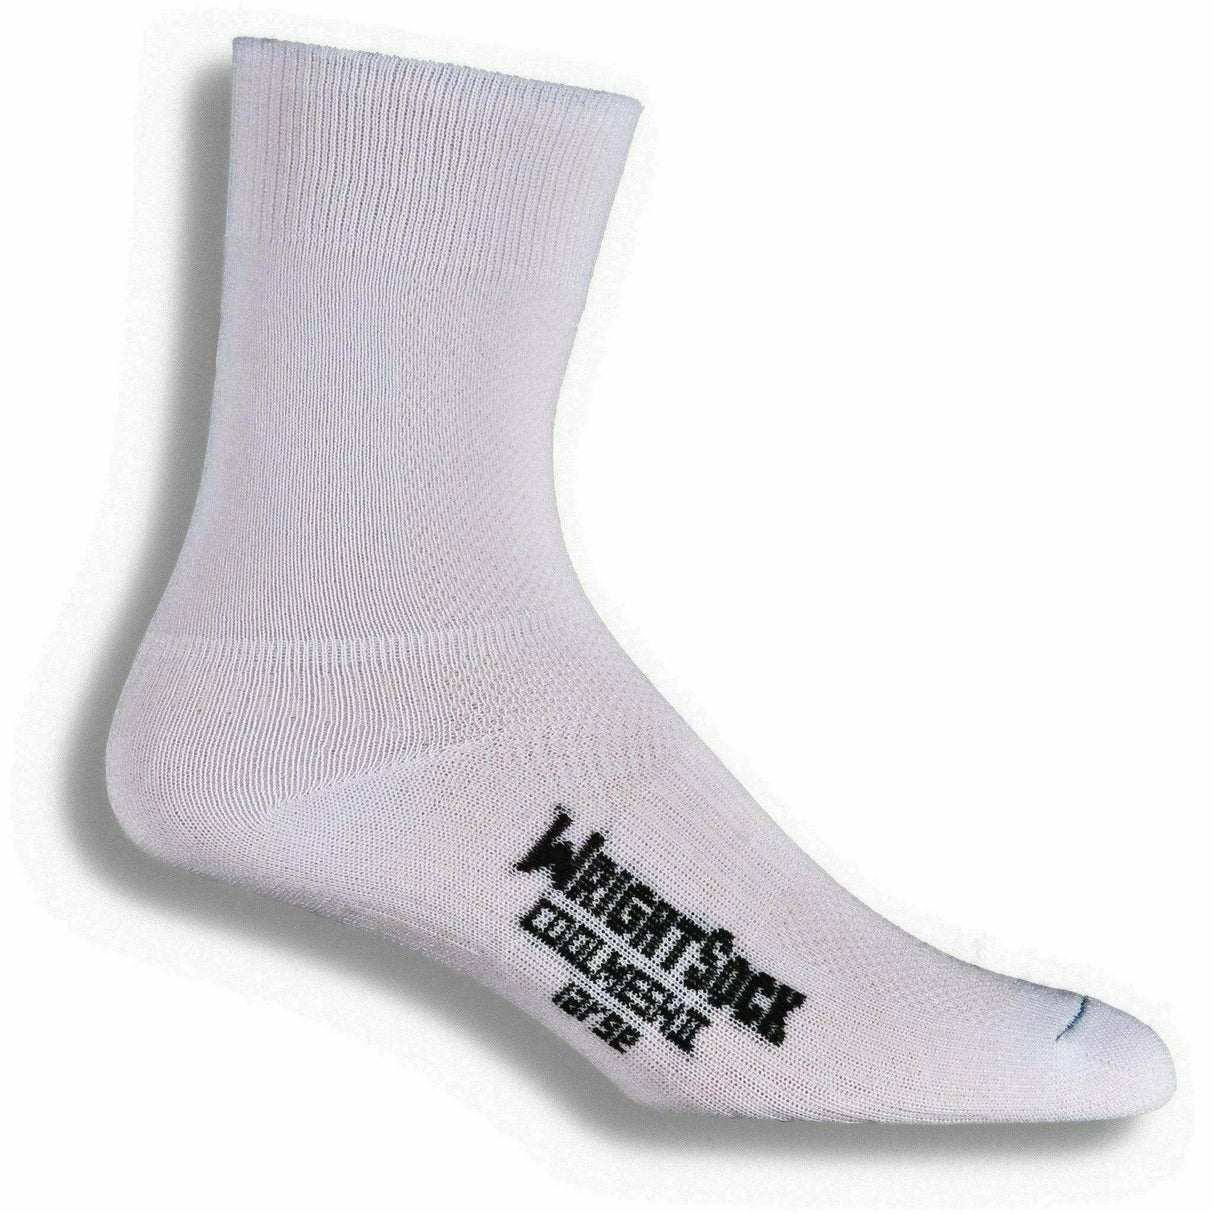 Wrightsock Coolmesh II Crew Socks - Clearance  -  Small / White / 2-Pair Pack